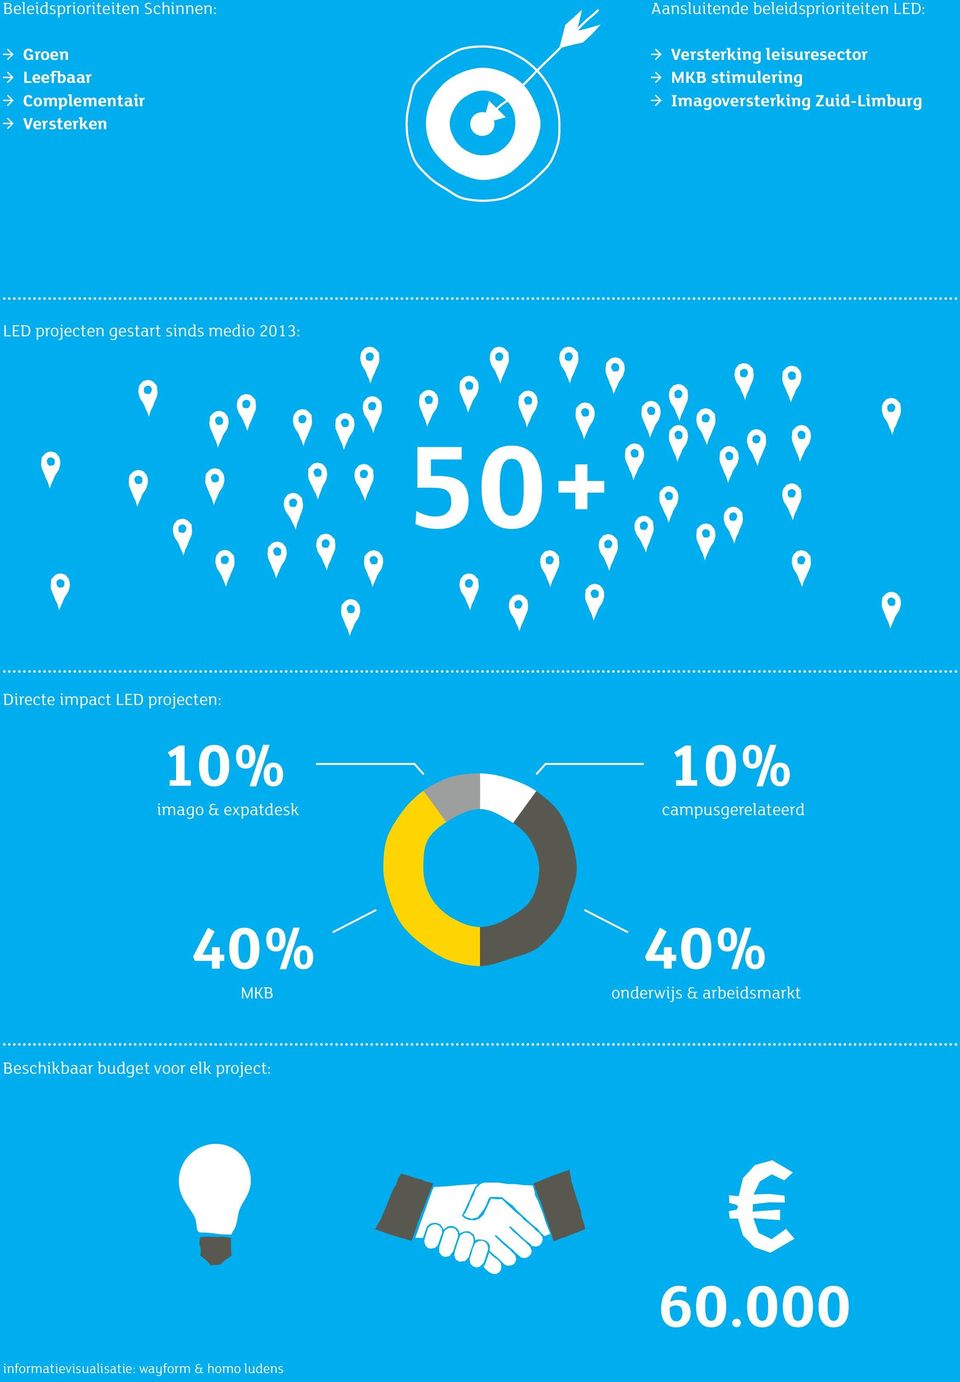 medio 2013: 50+ Directe impact LED projecten: 10% imago & expatdesk 10% campusgerelateerd 40% MKB 40%